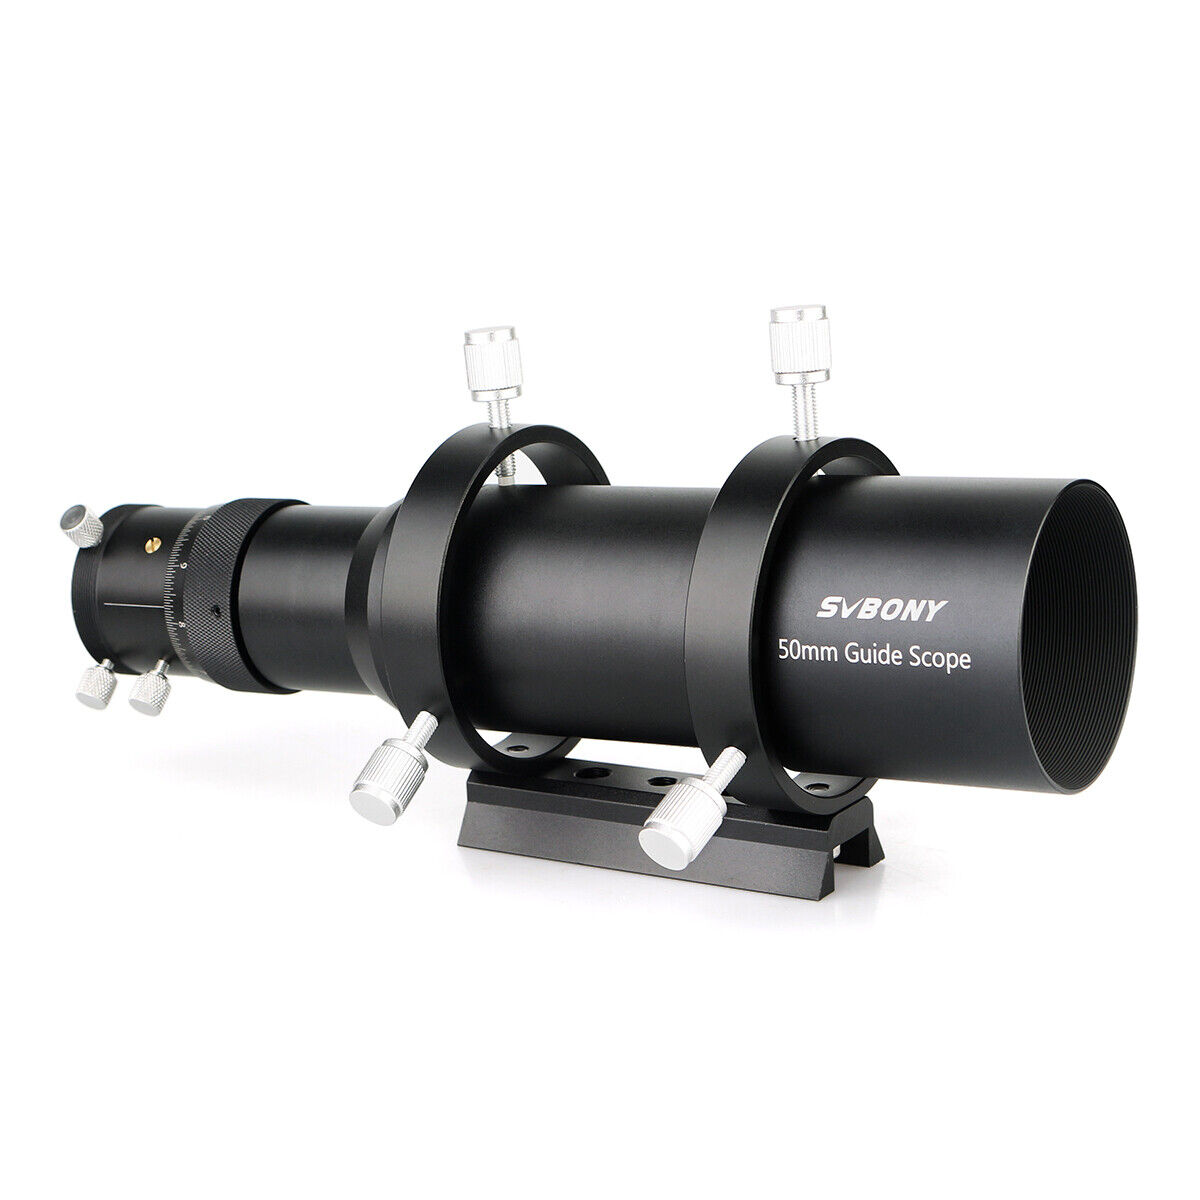 SVBONY 30/50/60mm Guide teleScope Compact Deluxe Finderscope Versatile Telescope